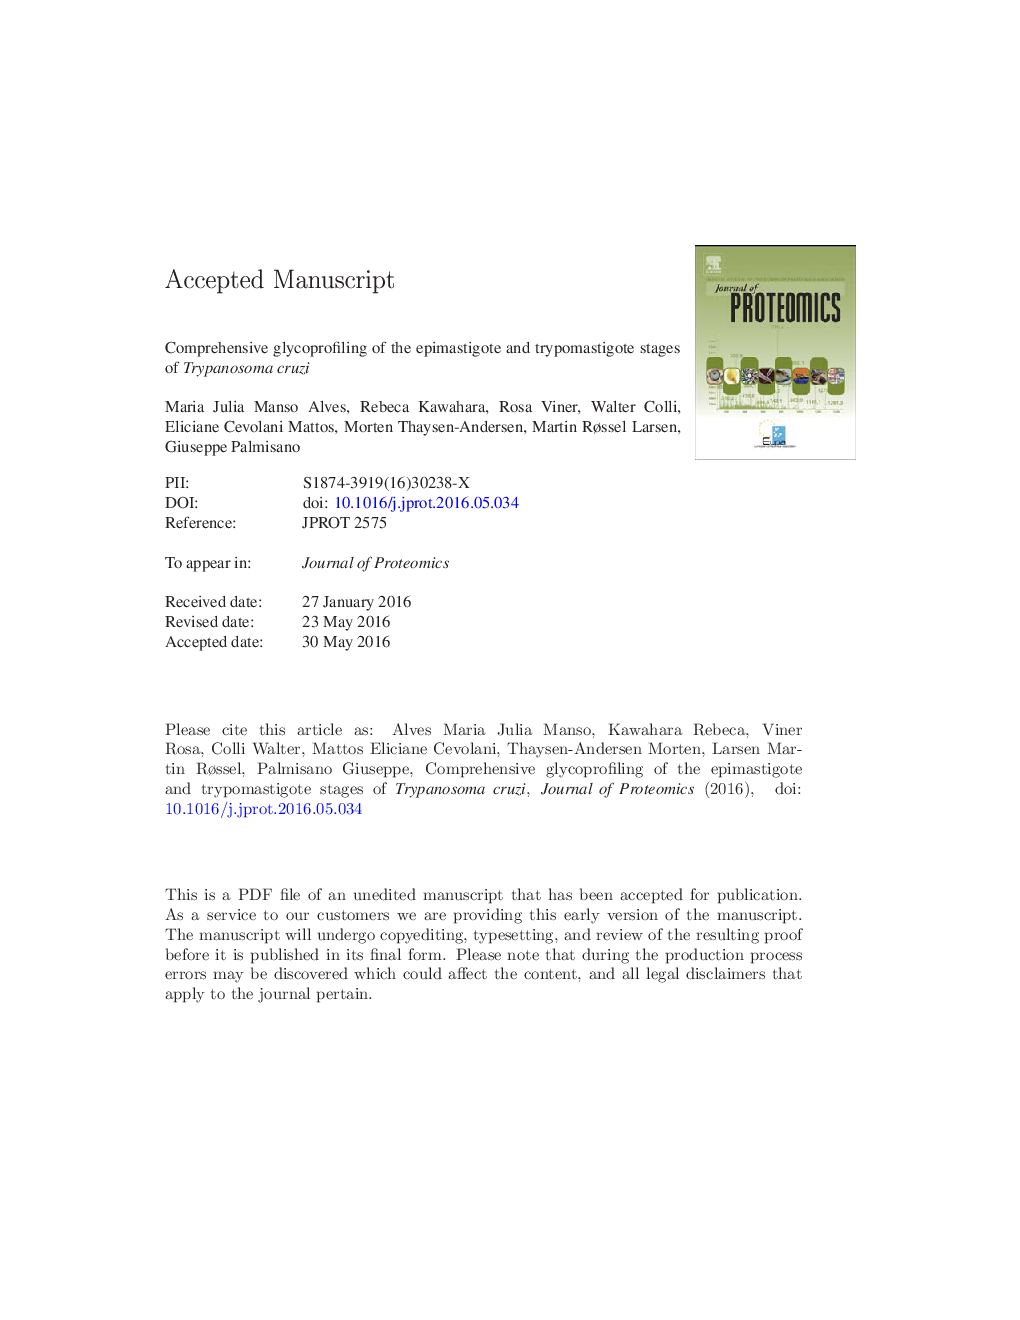 Comprehensive glycoprofiling of the epimastigote and trypomastigote stages of Trypanosoma cruzi